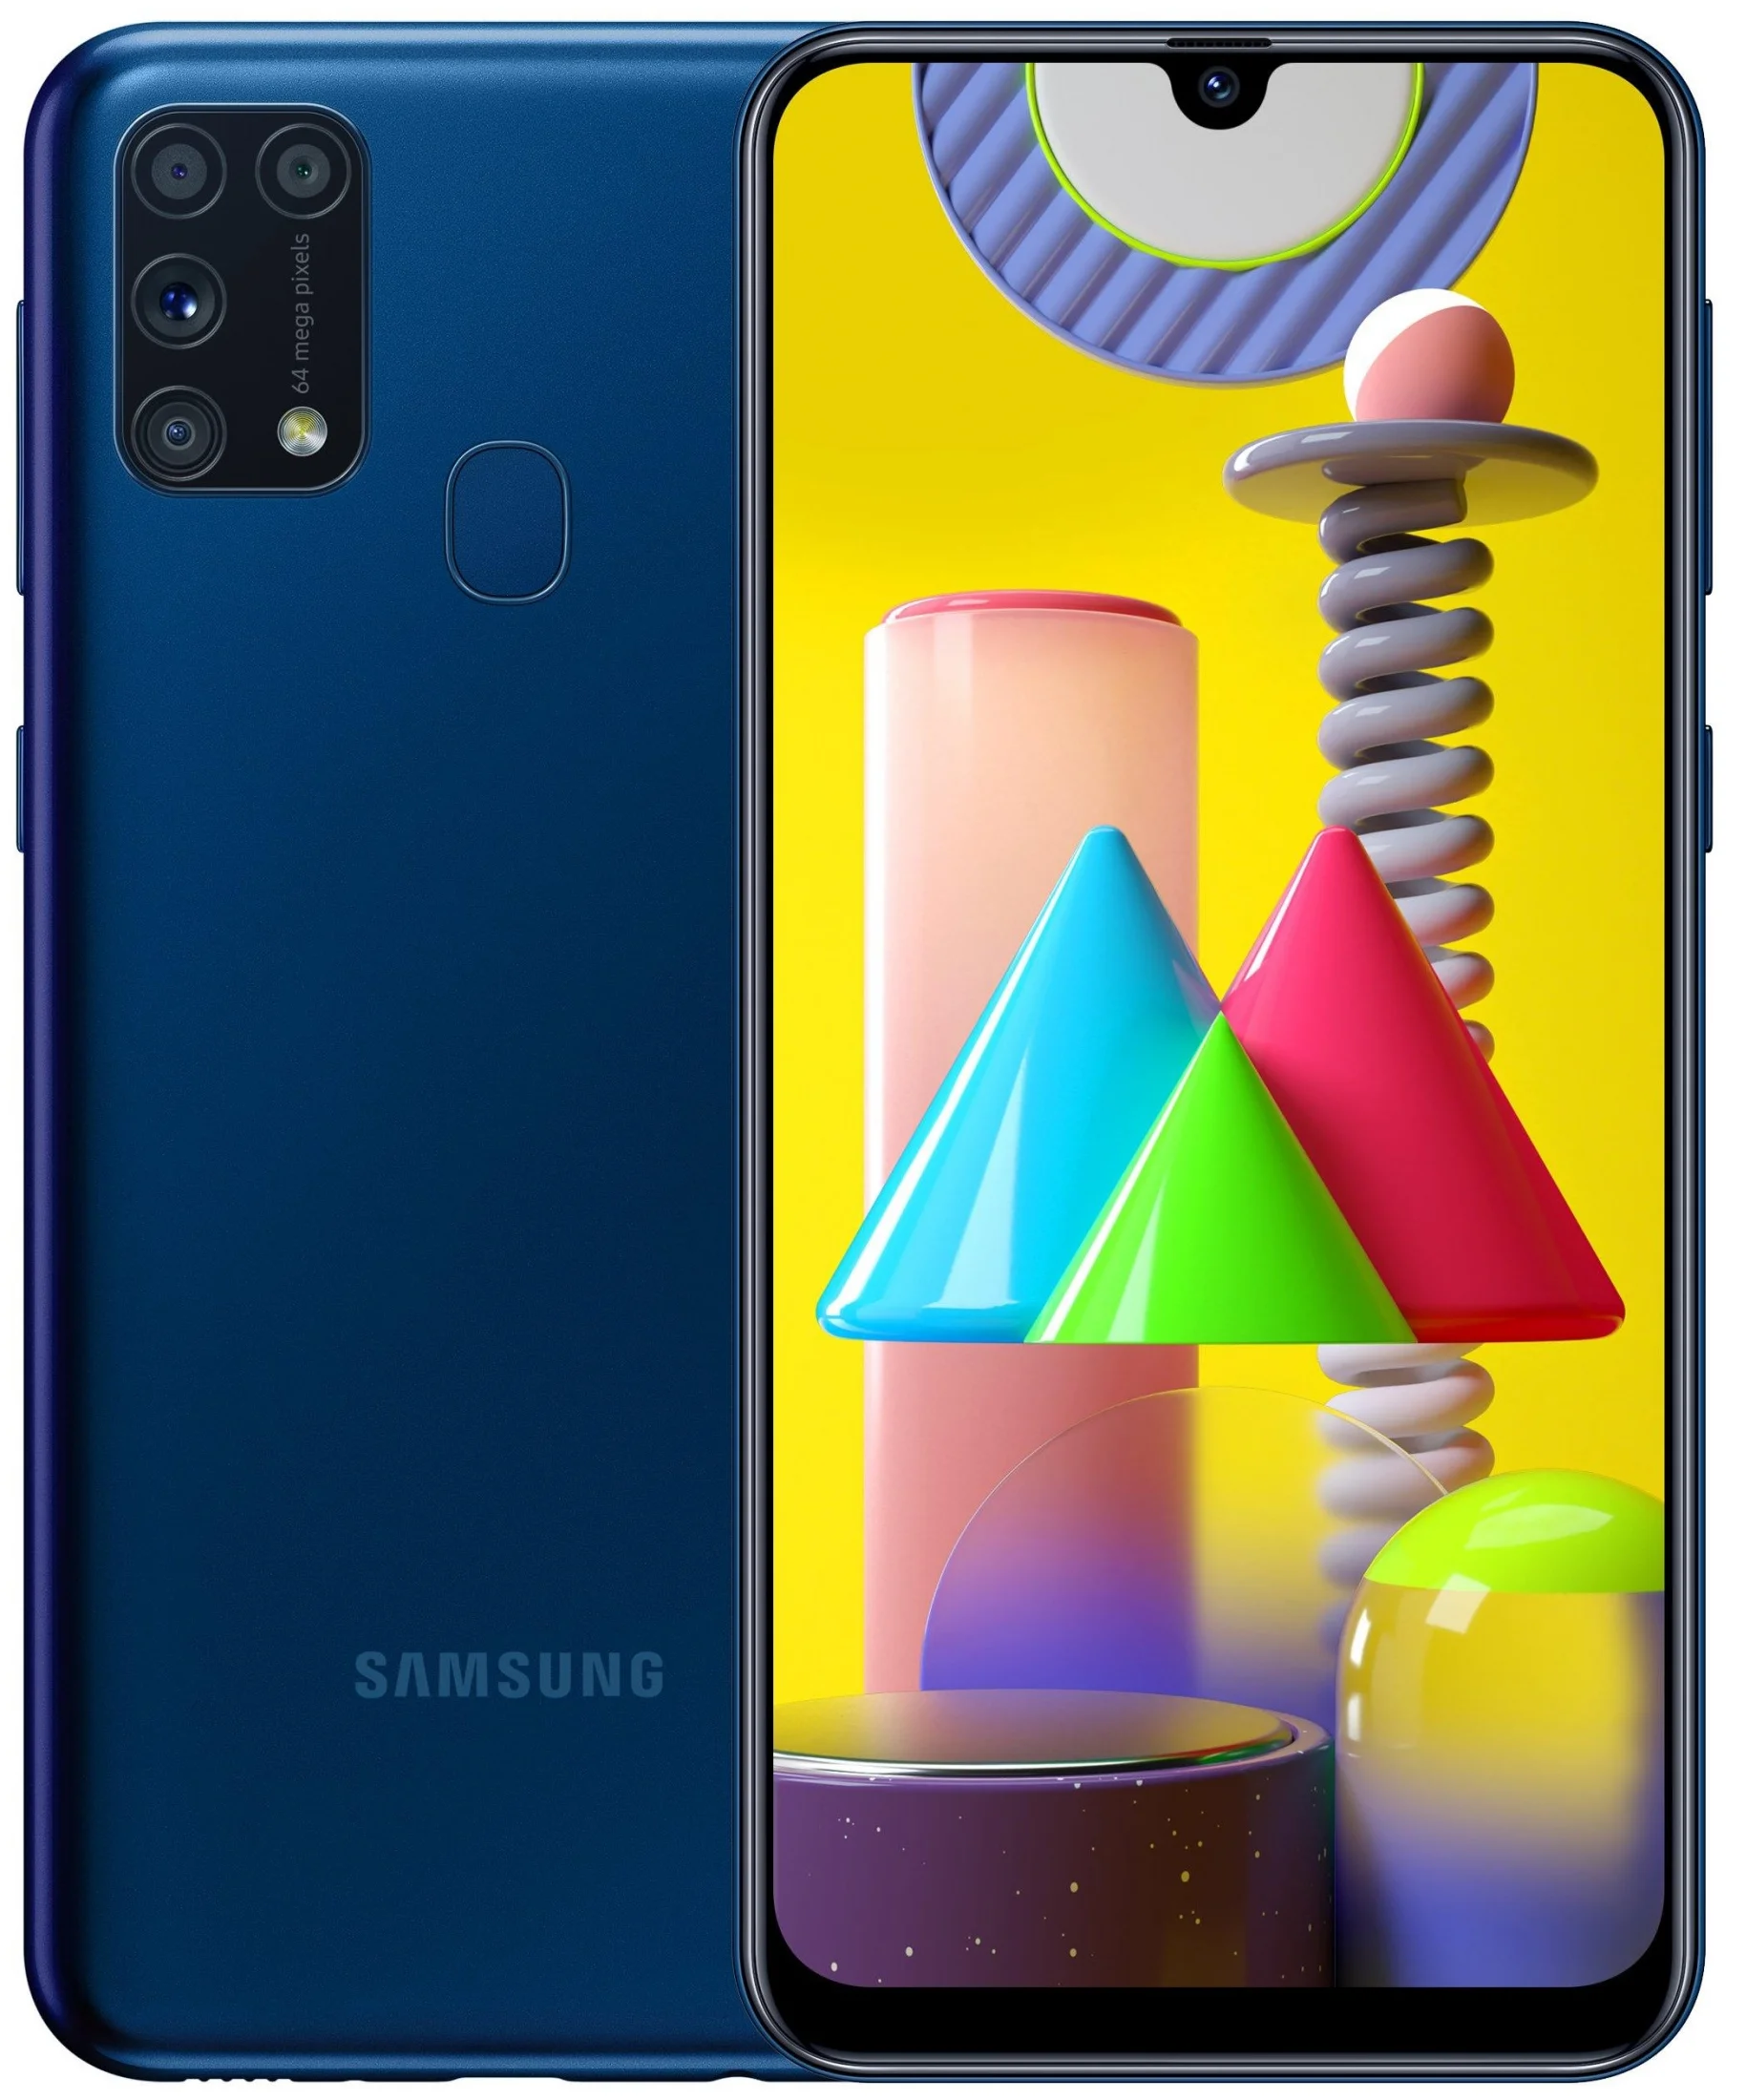 Samsung Galaxy M31 - интернет: 4G LTE